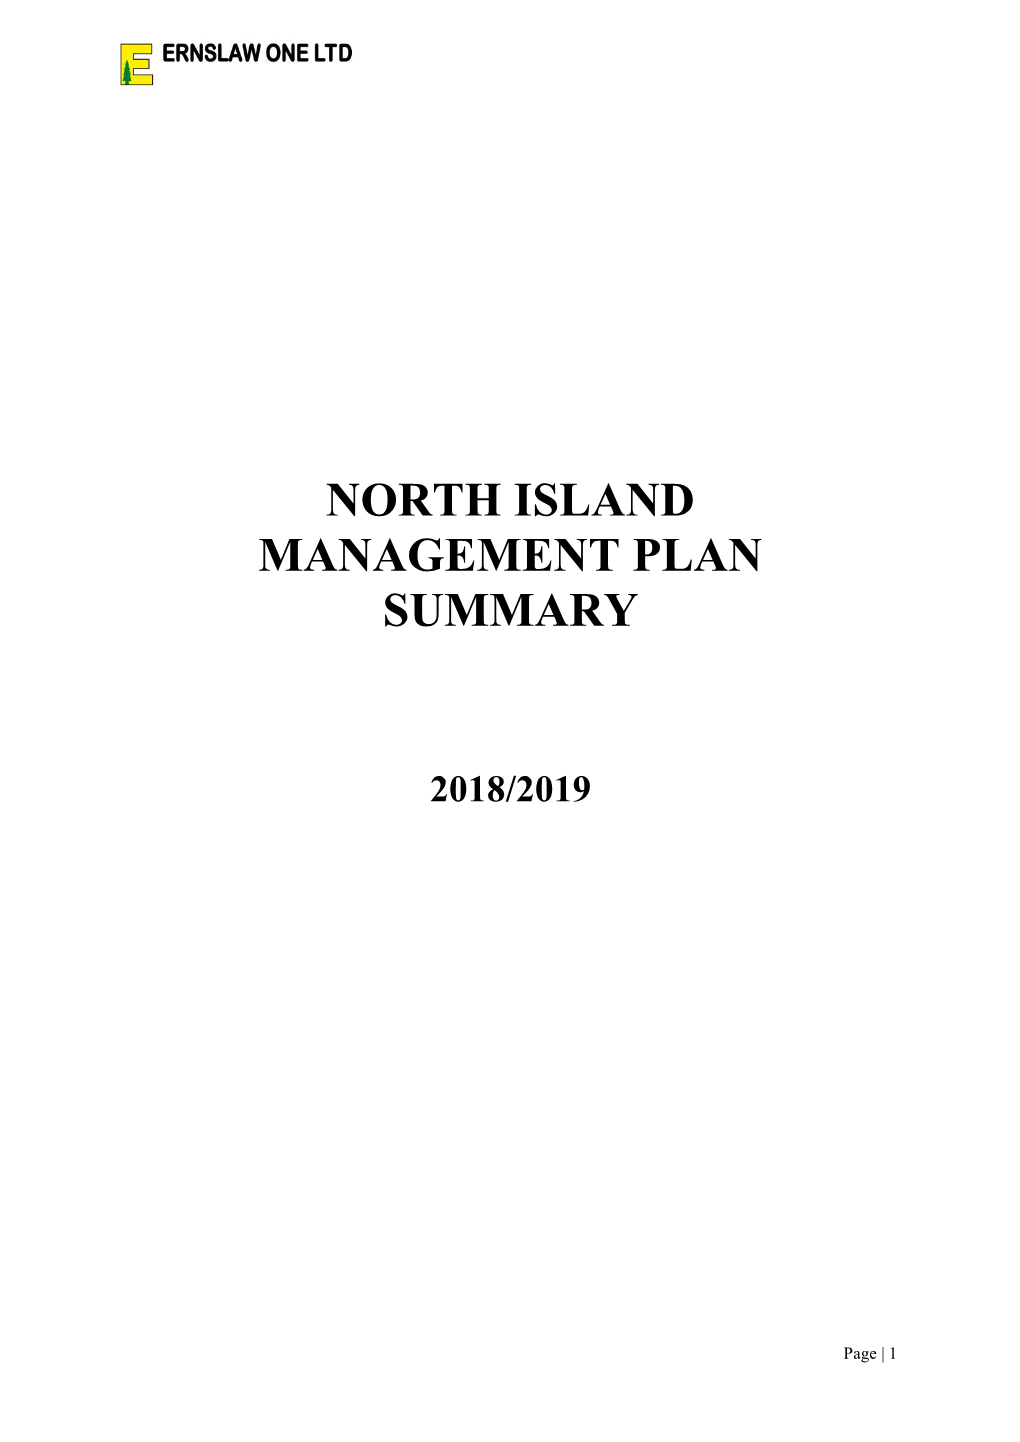 North Island Management Plan Summary